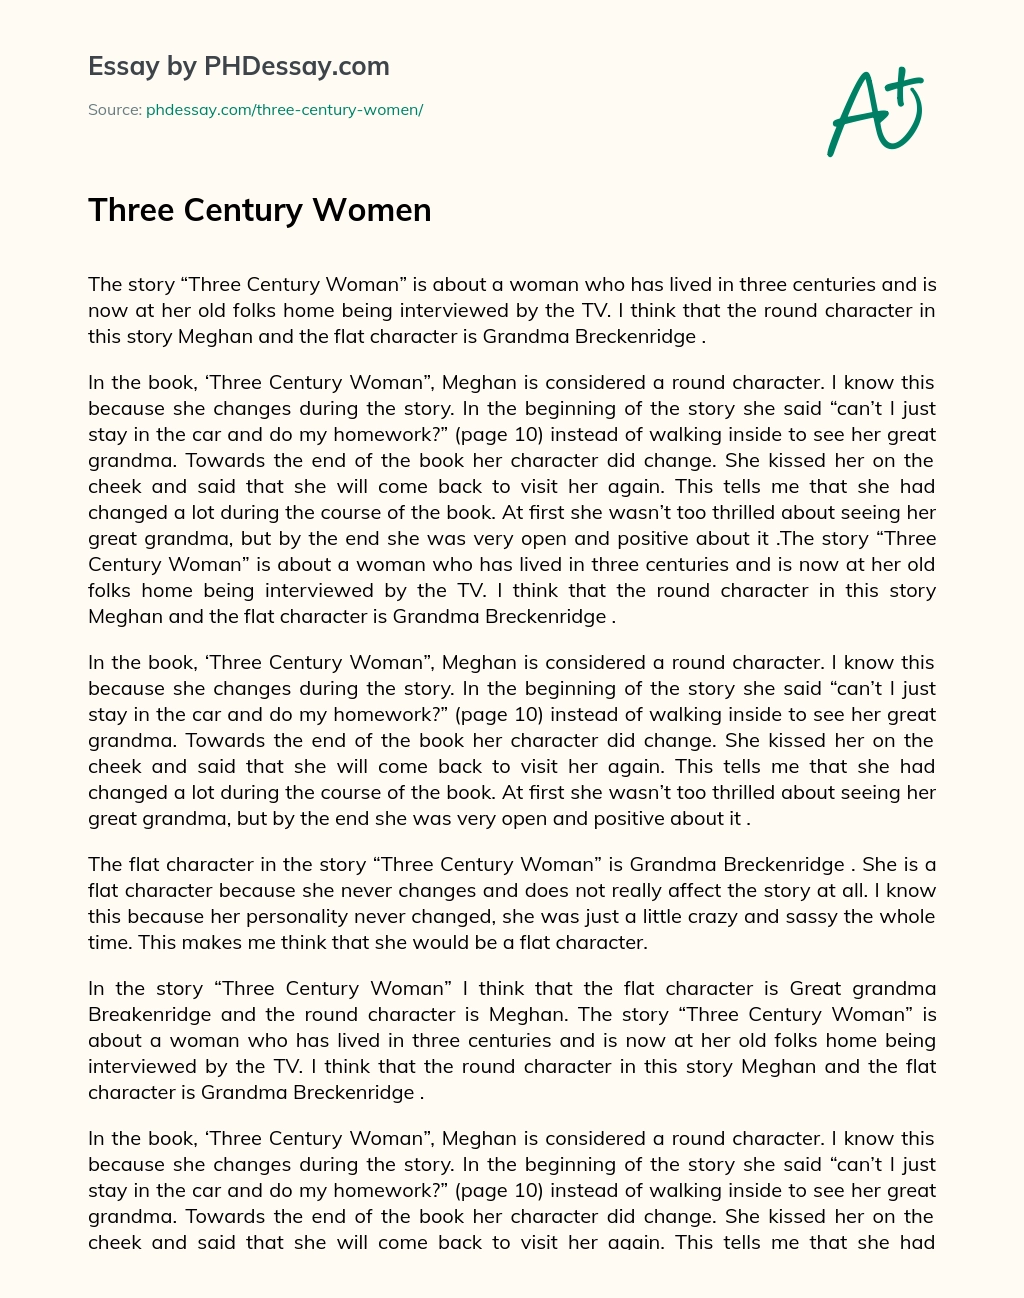 Three Century Women essay